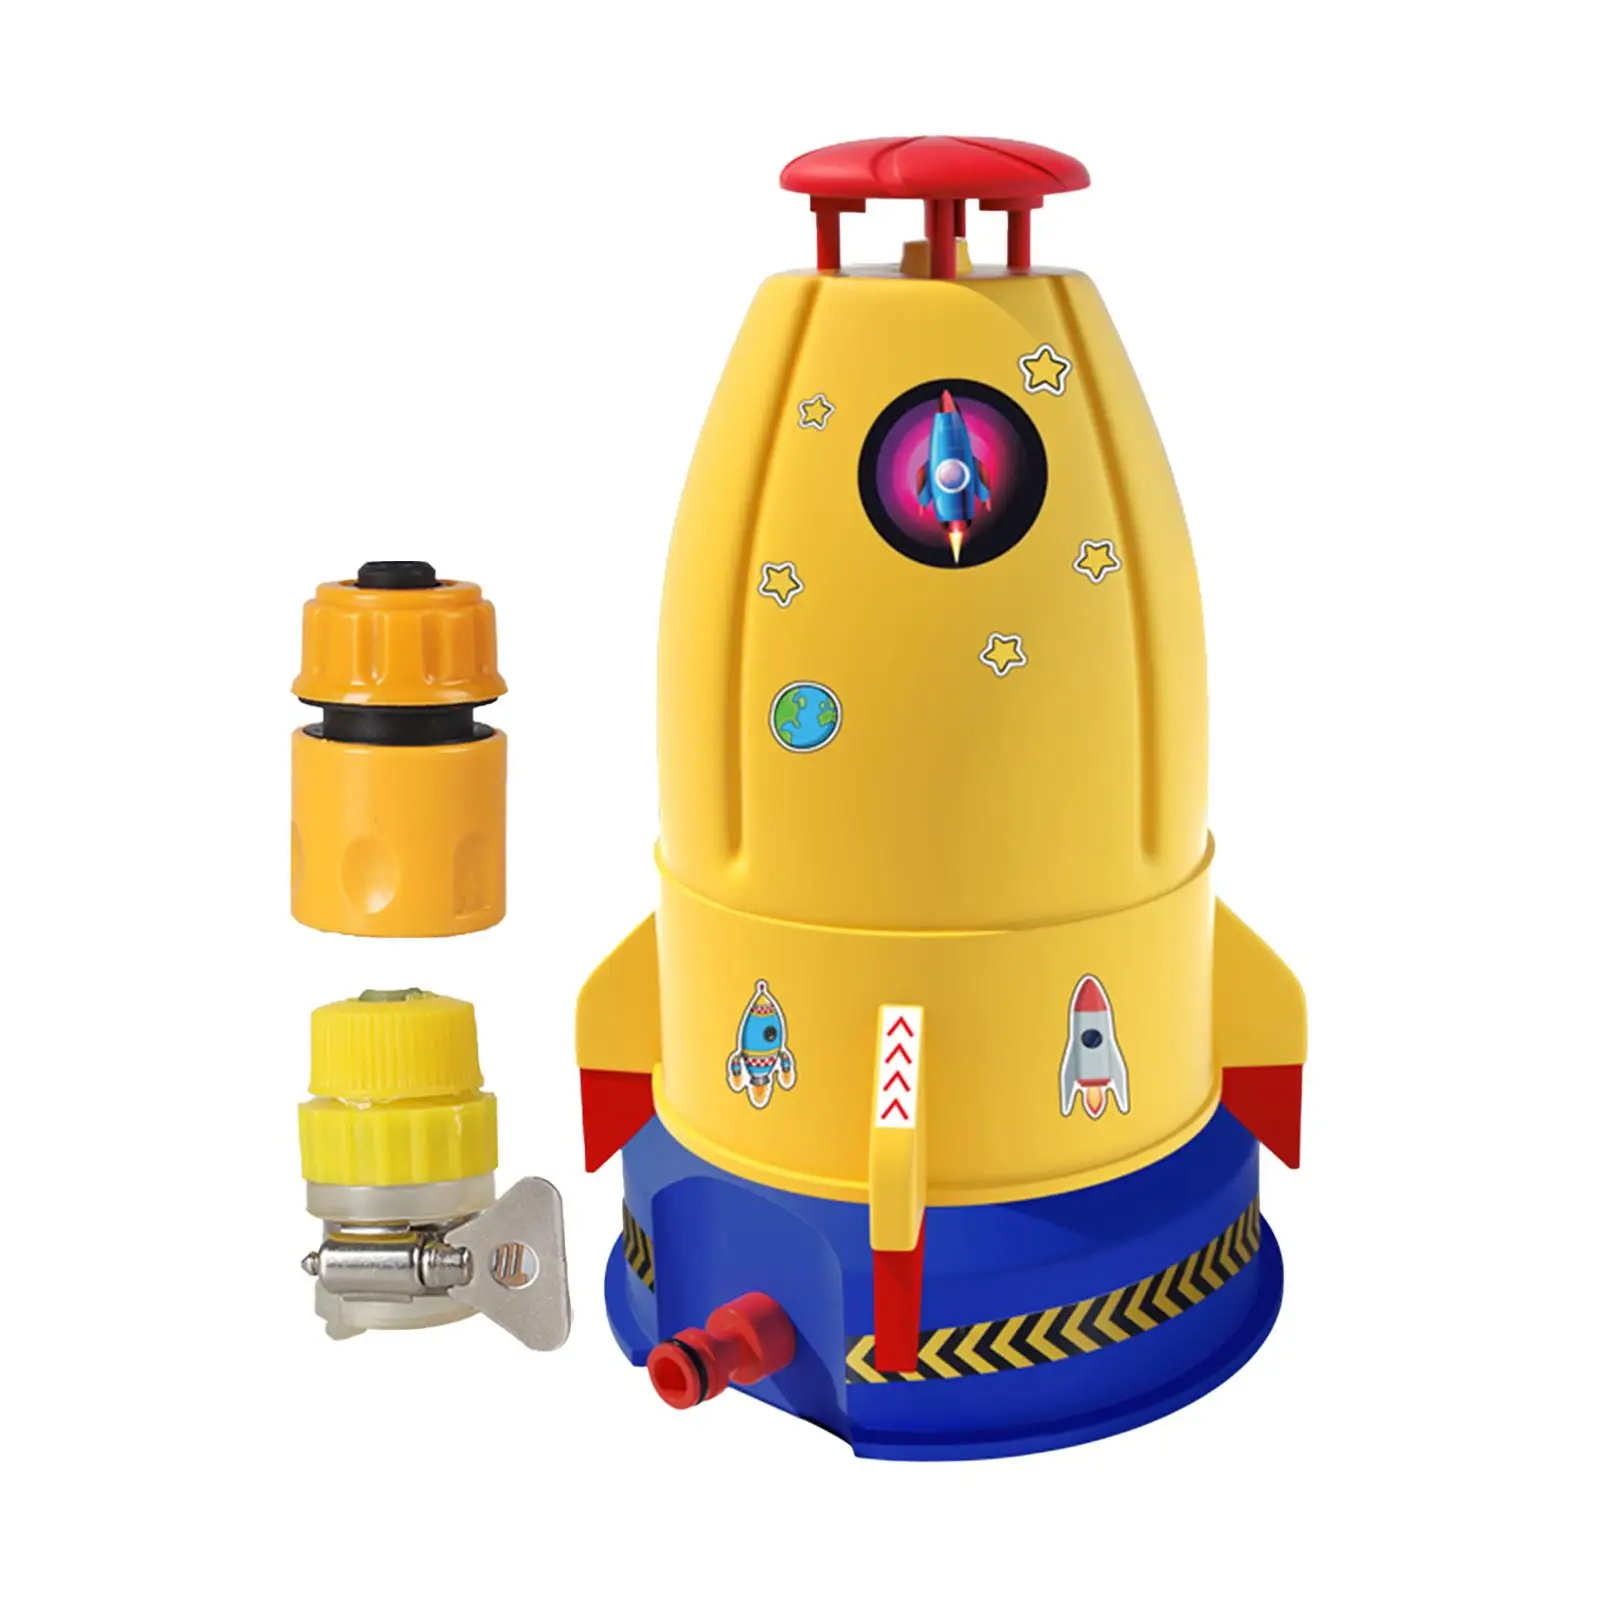 Rocket Water Toys Kids Rocket Sprinkler for Party Birthday Gift